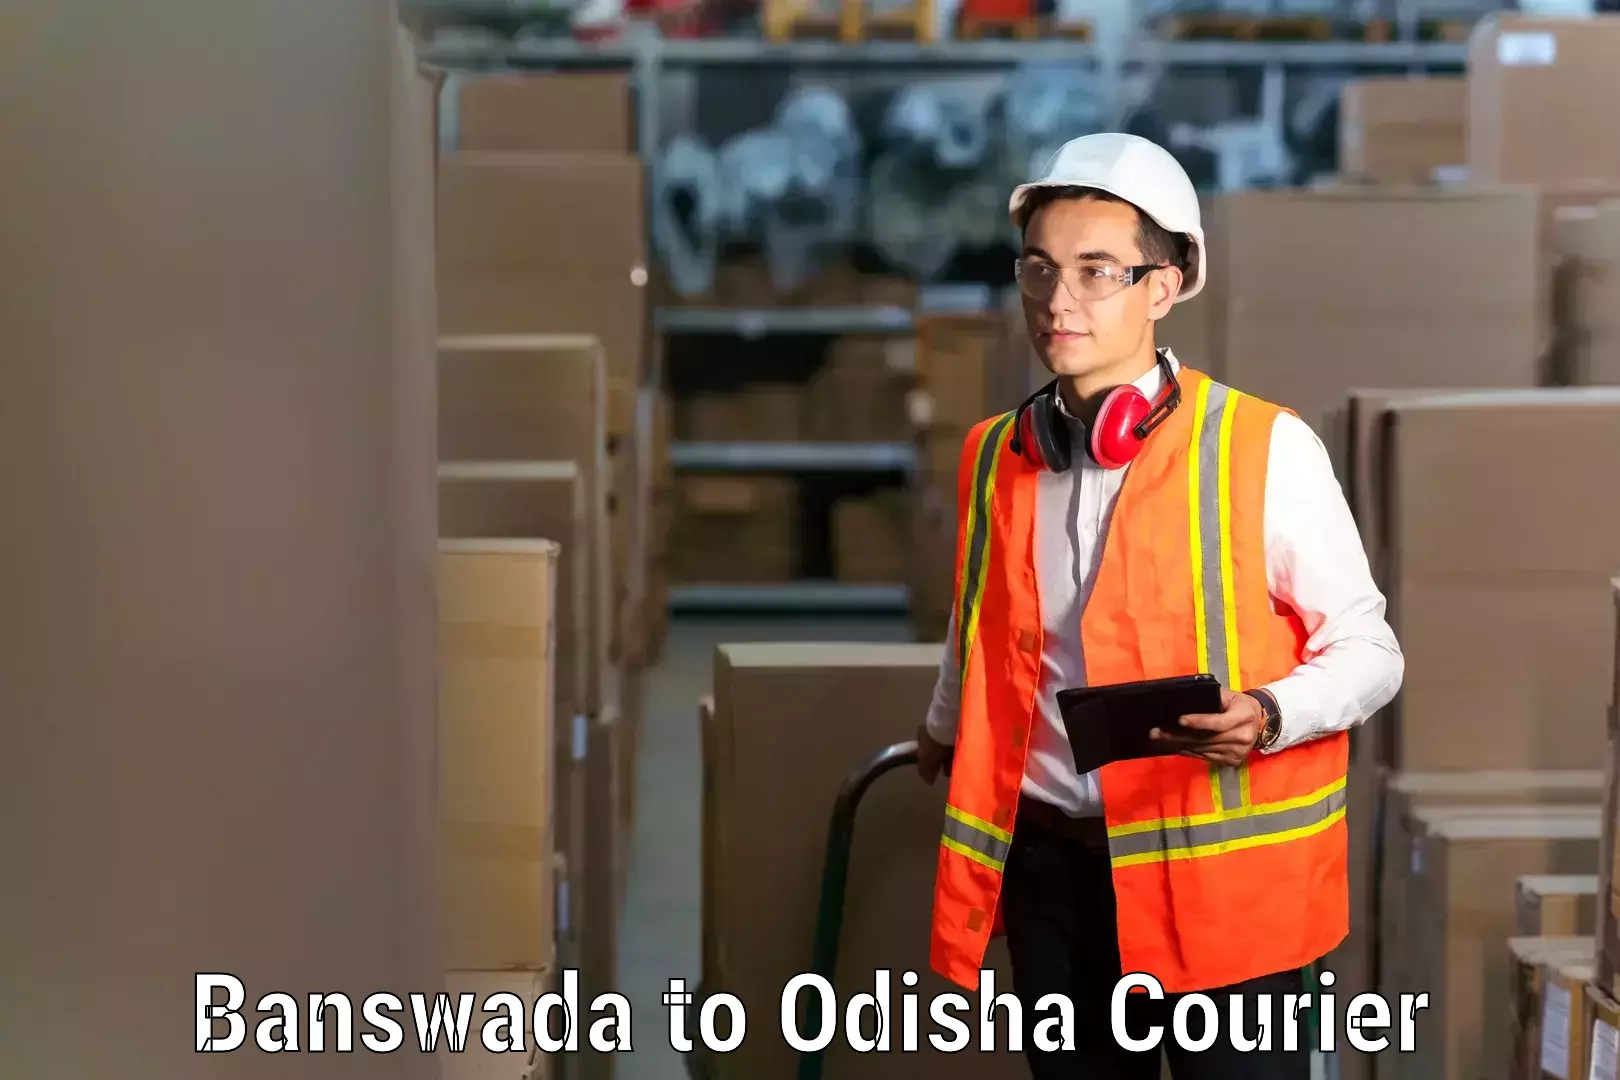 Furniture delivery service in Banswada to Odisha